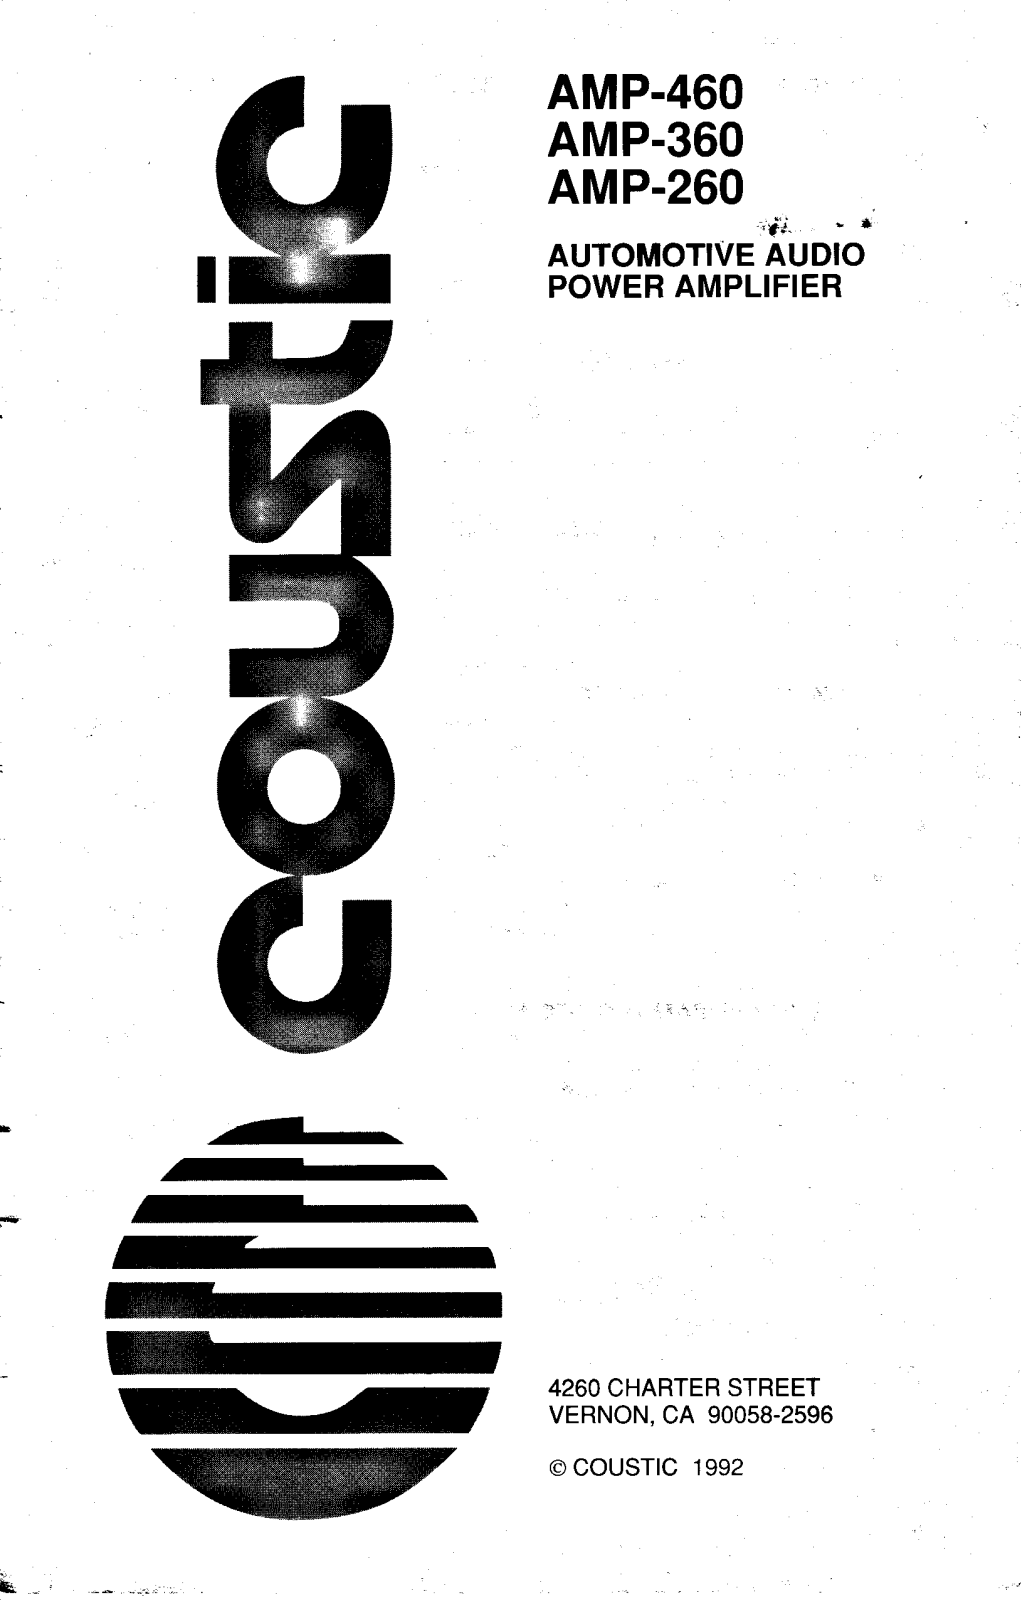 Coustic AMP-460, AMP-360, AMP-260 Instruction Manual